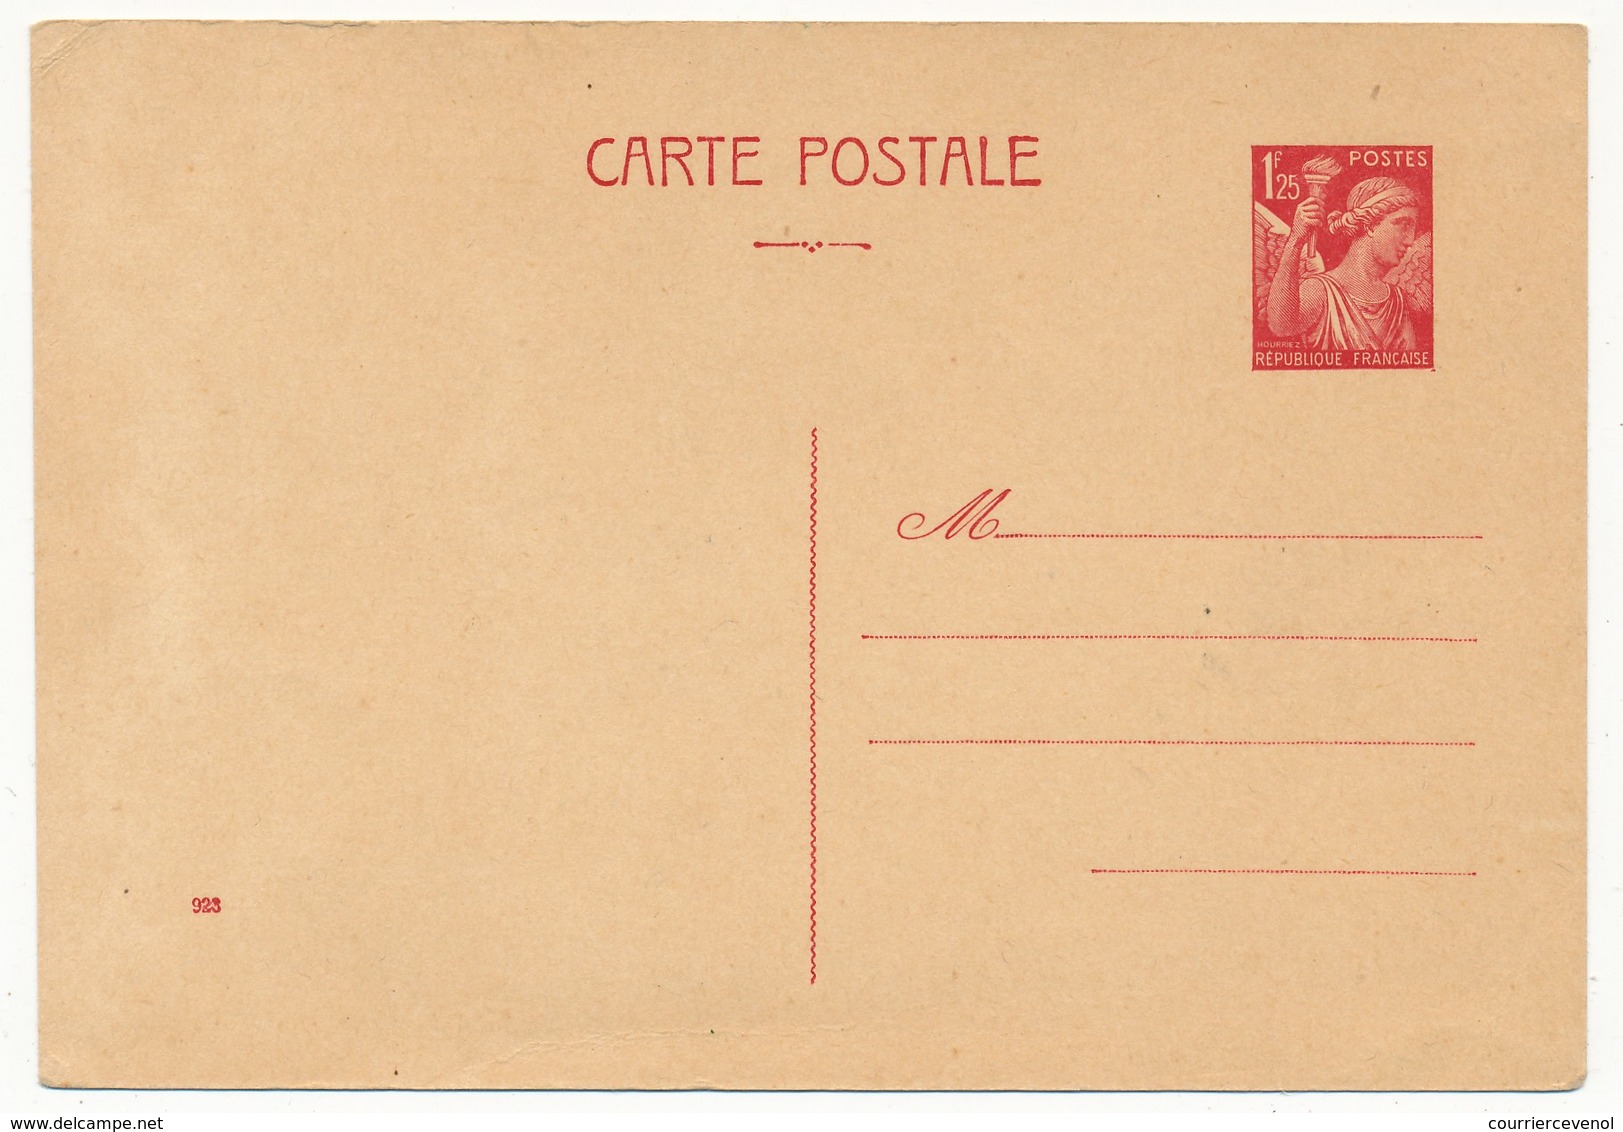 FRANCE - CP Type Iris - 1,25F - Carte Postale Datée 923, Neuve Et TTB - Cartes Postales Types Et TSC (avant 1995)